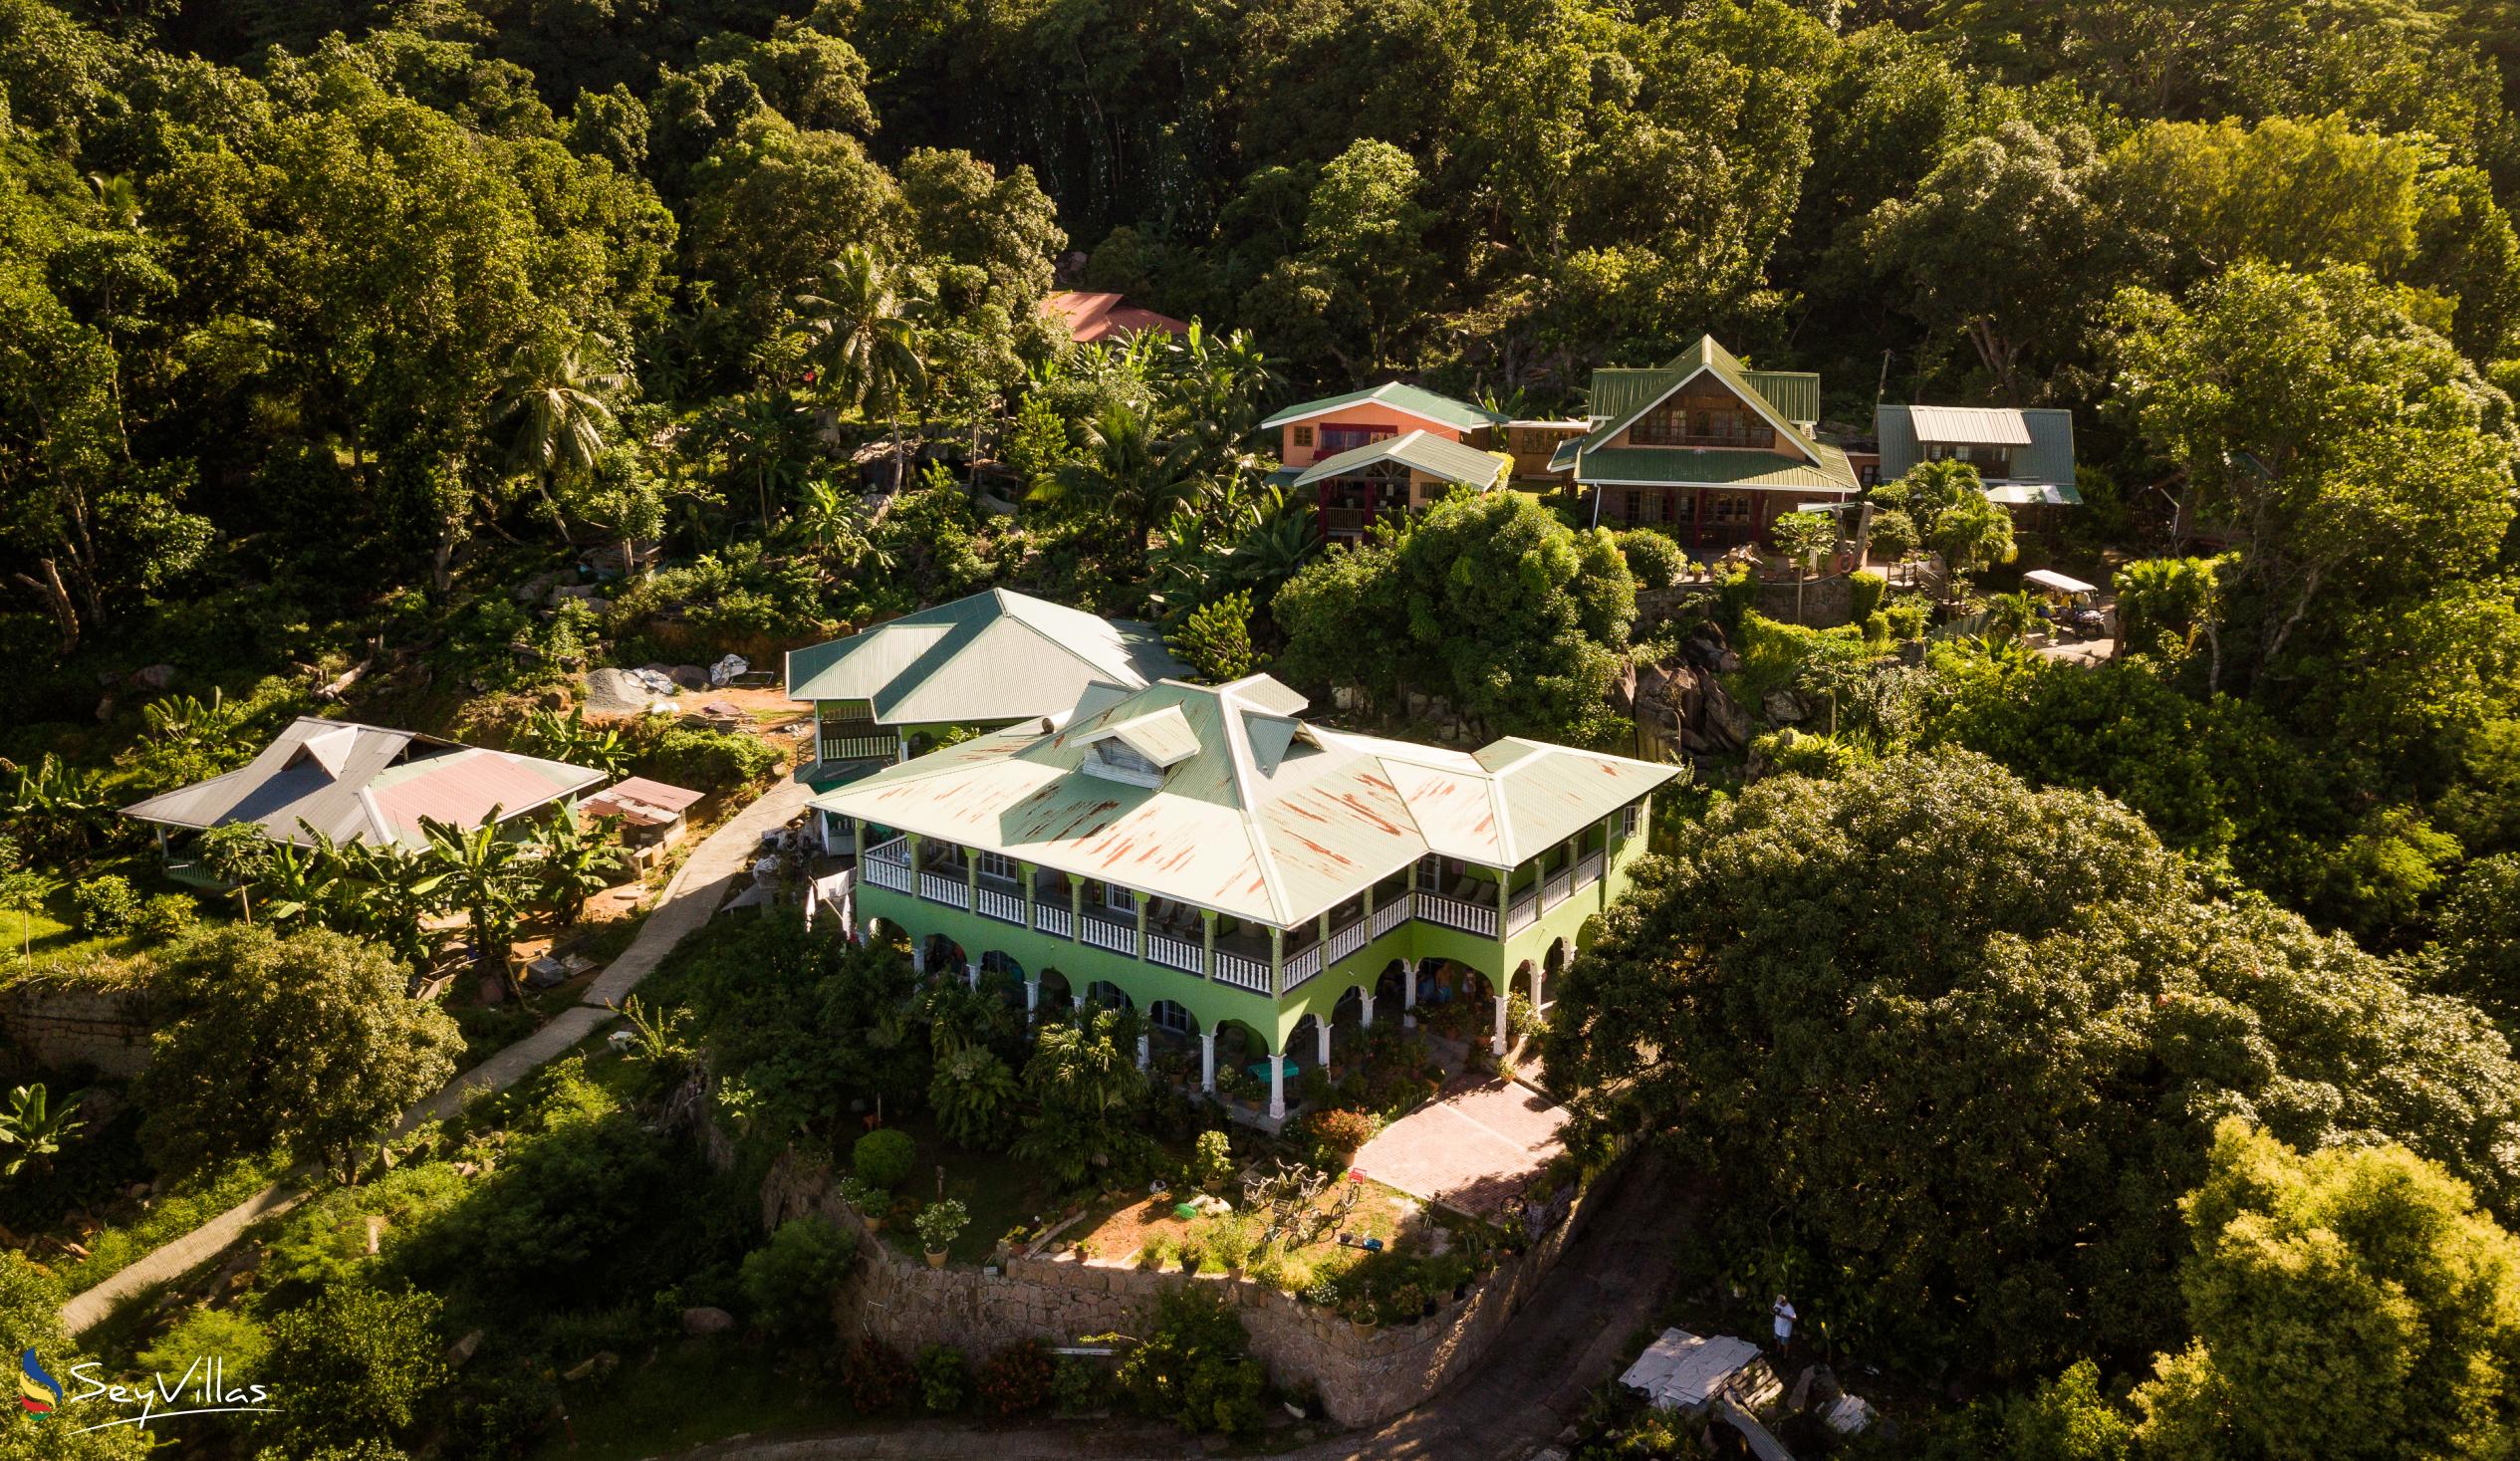 Foto 4: Villa Hortensia - Aussenbereich - La Digue (Seychellen)